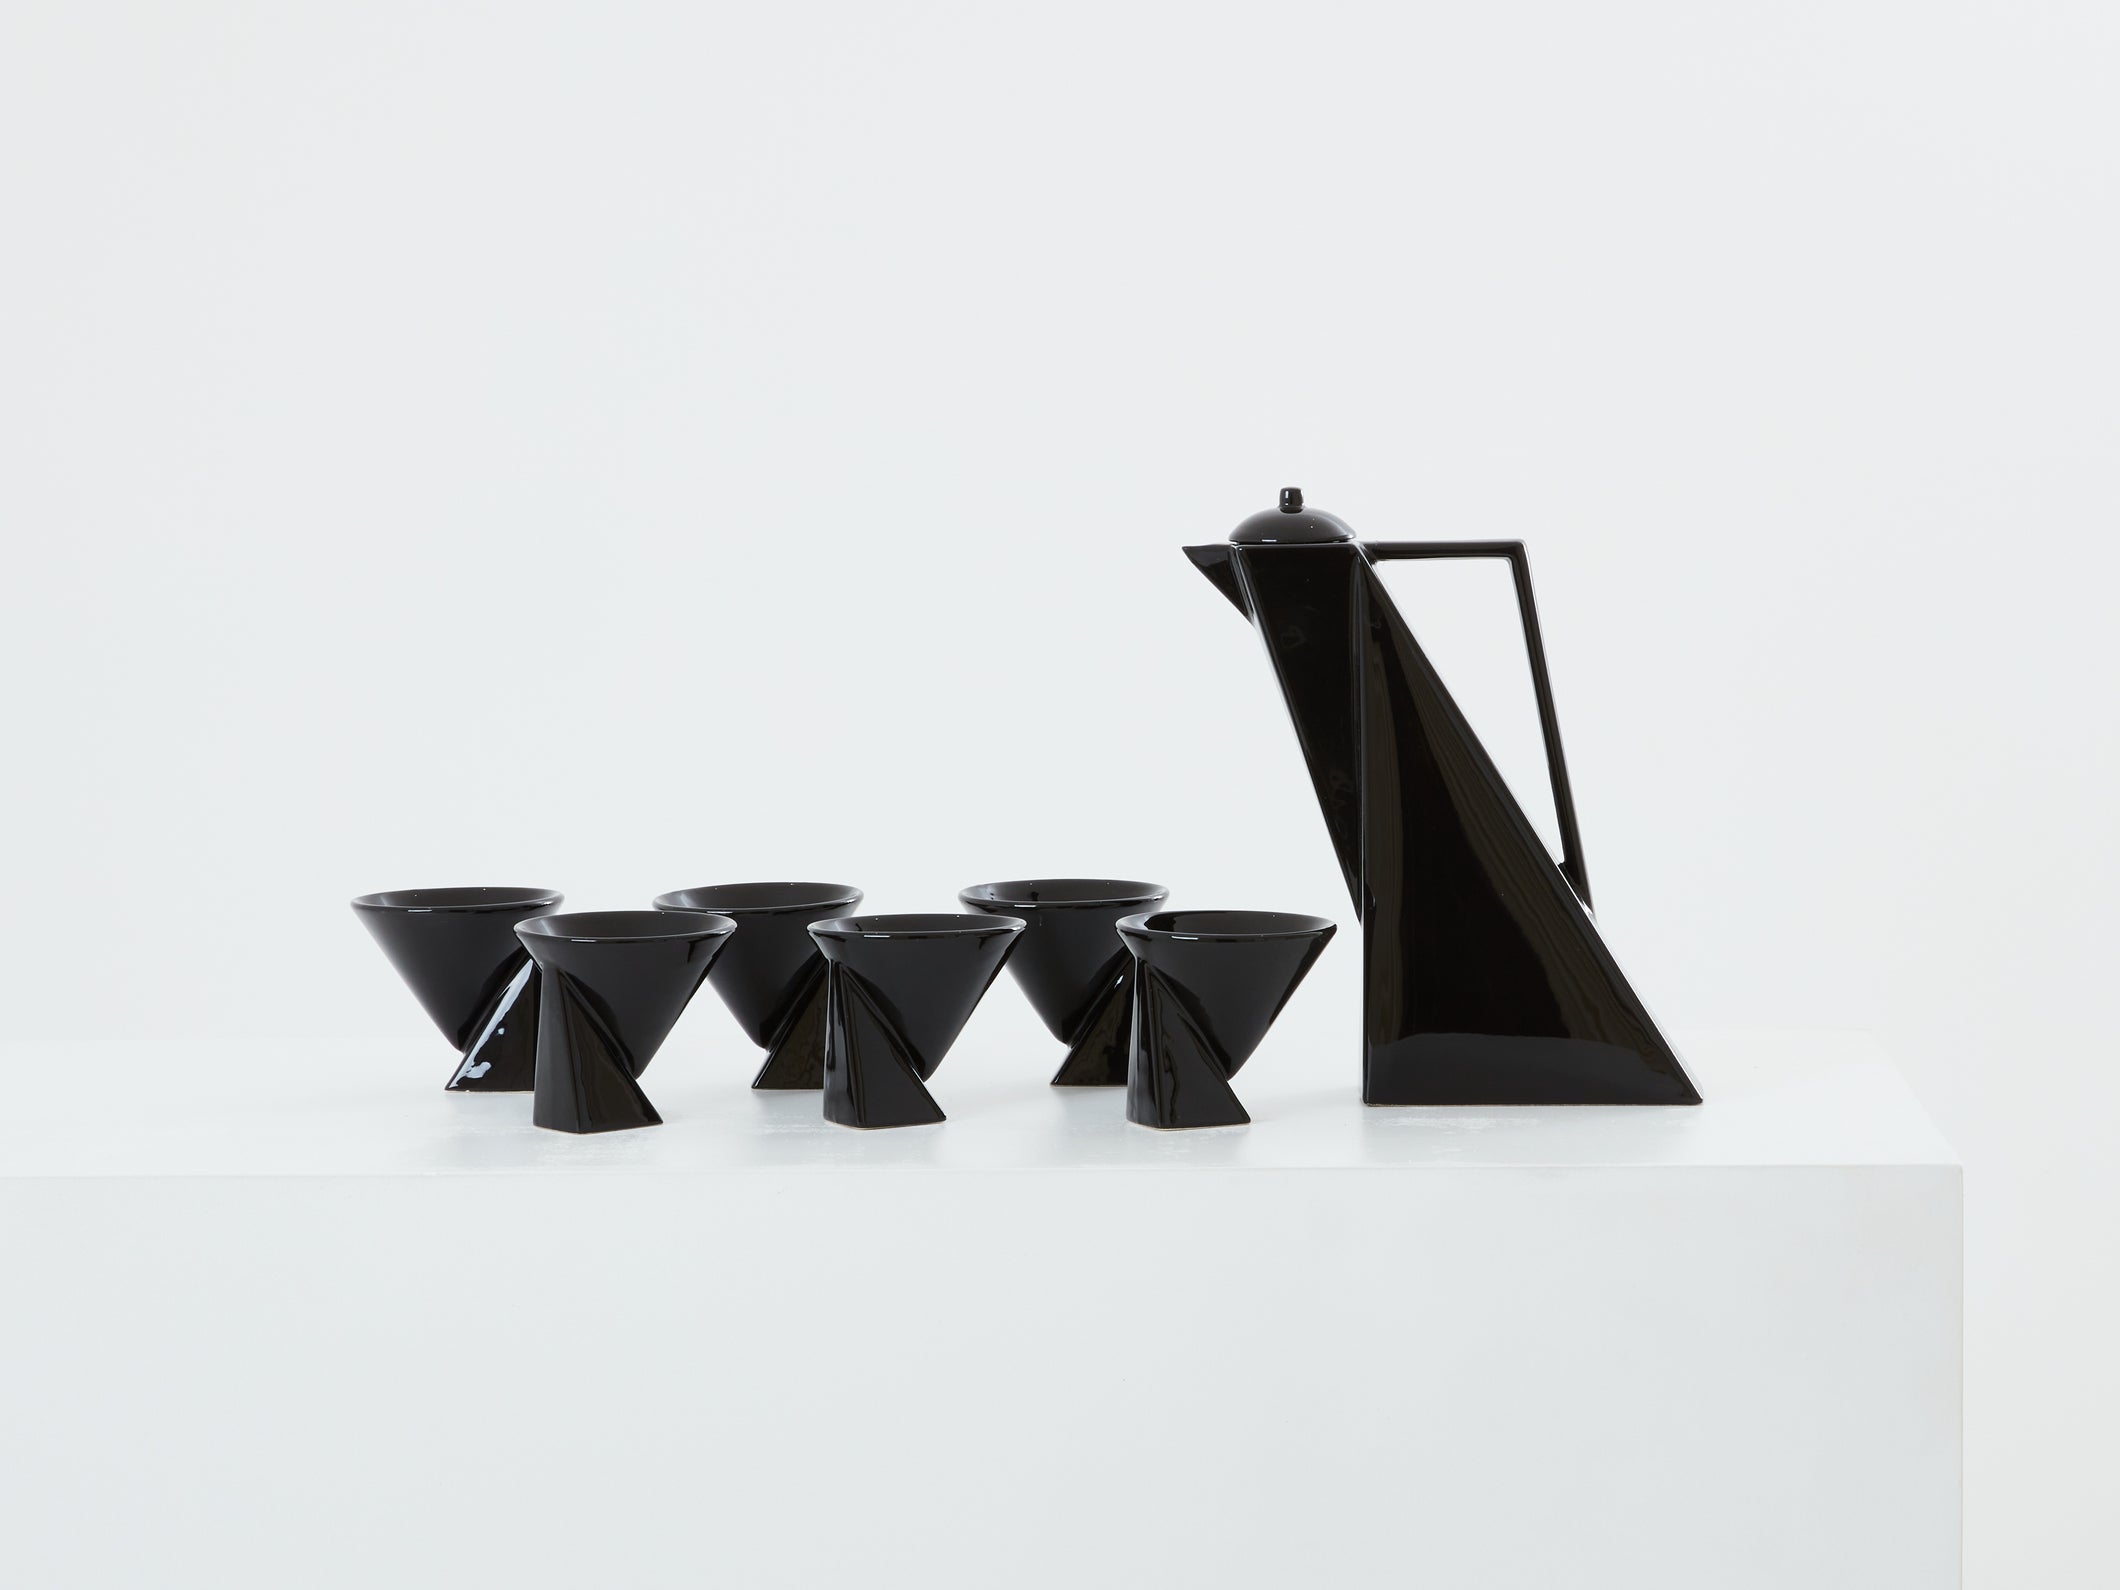 Pierre Casenove for Studio Salins glazed ceramic coffee set 1980s